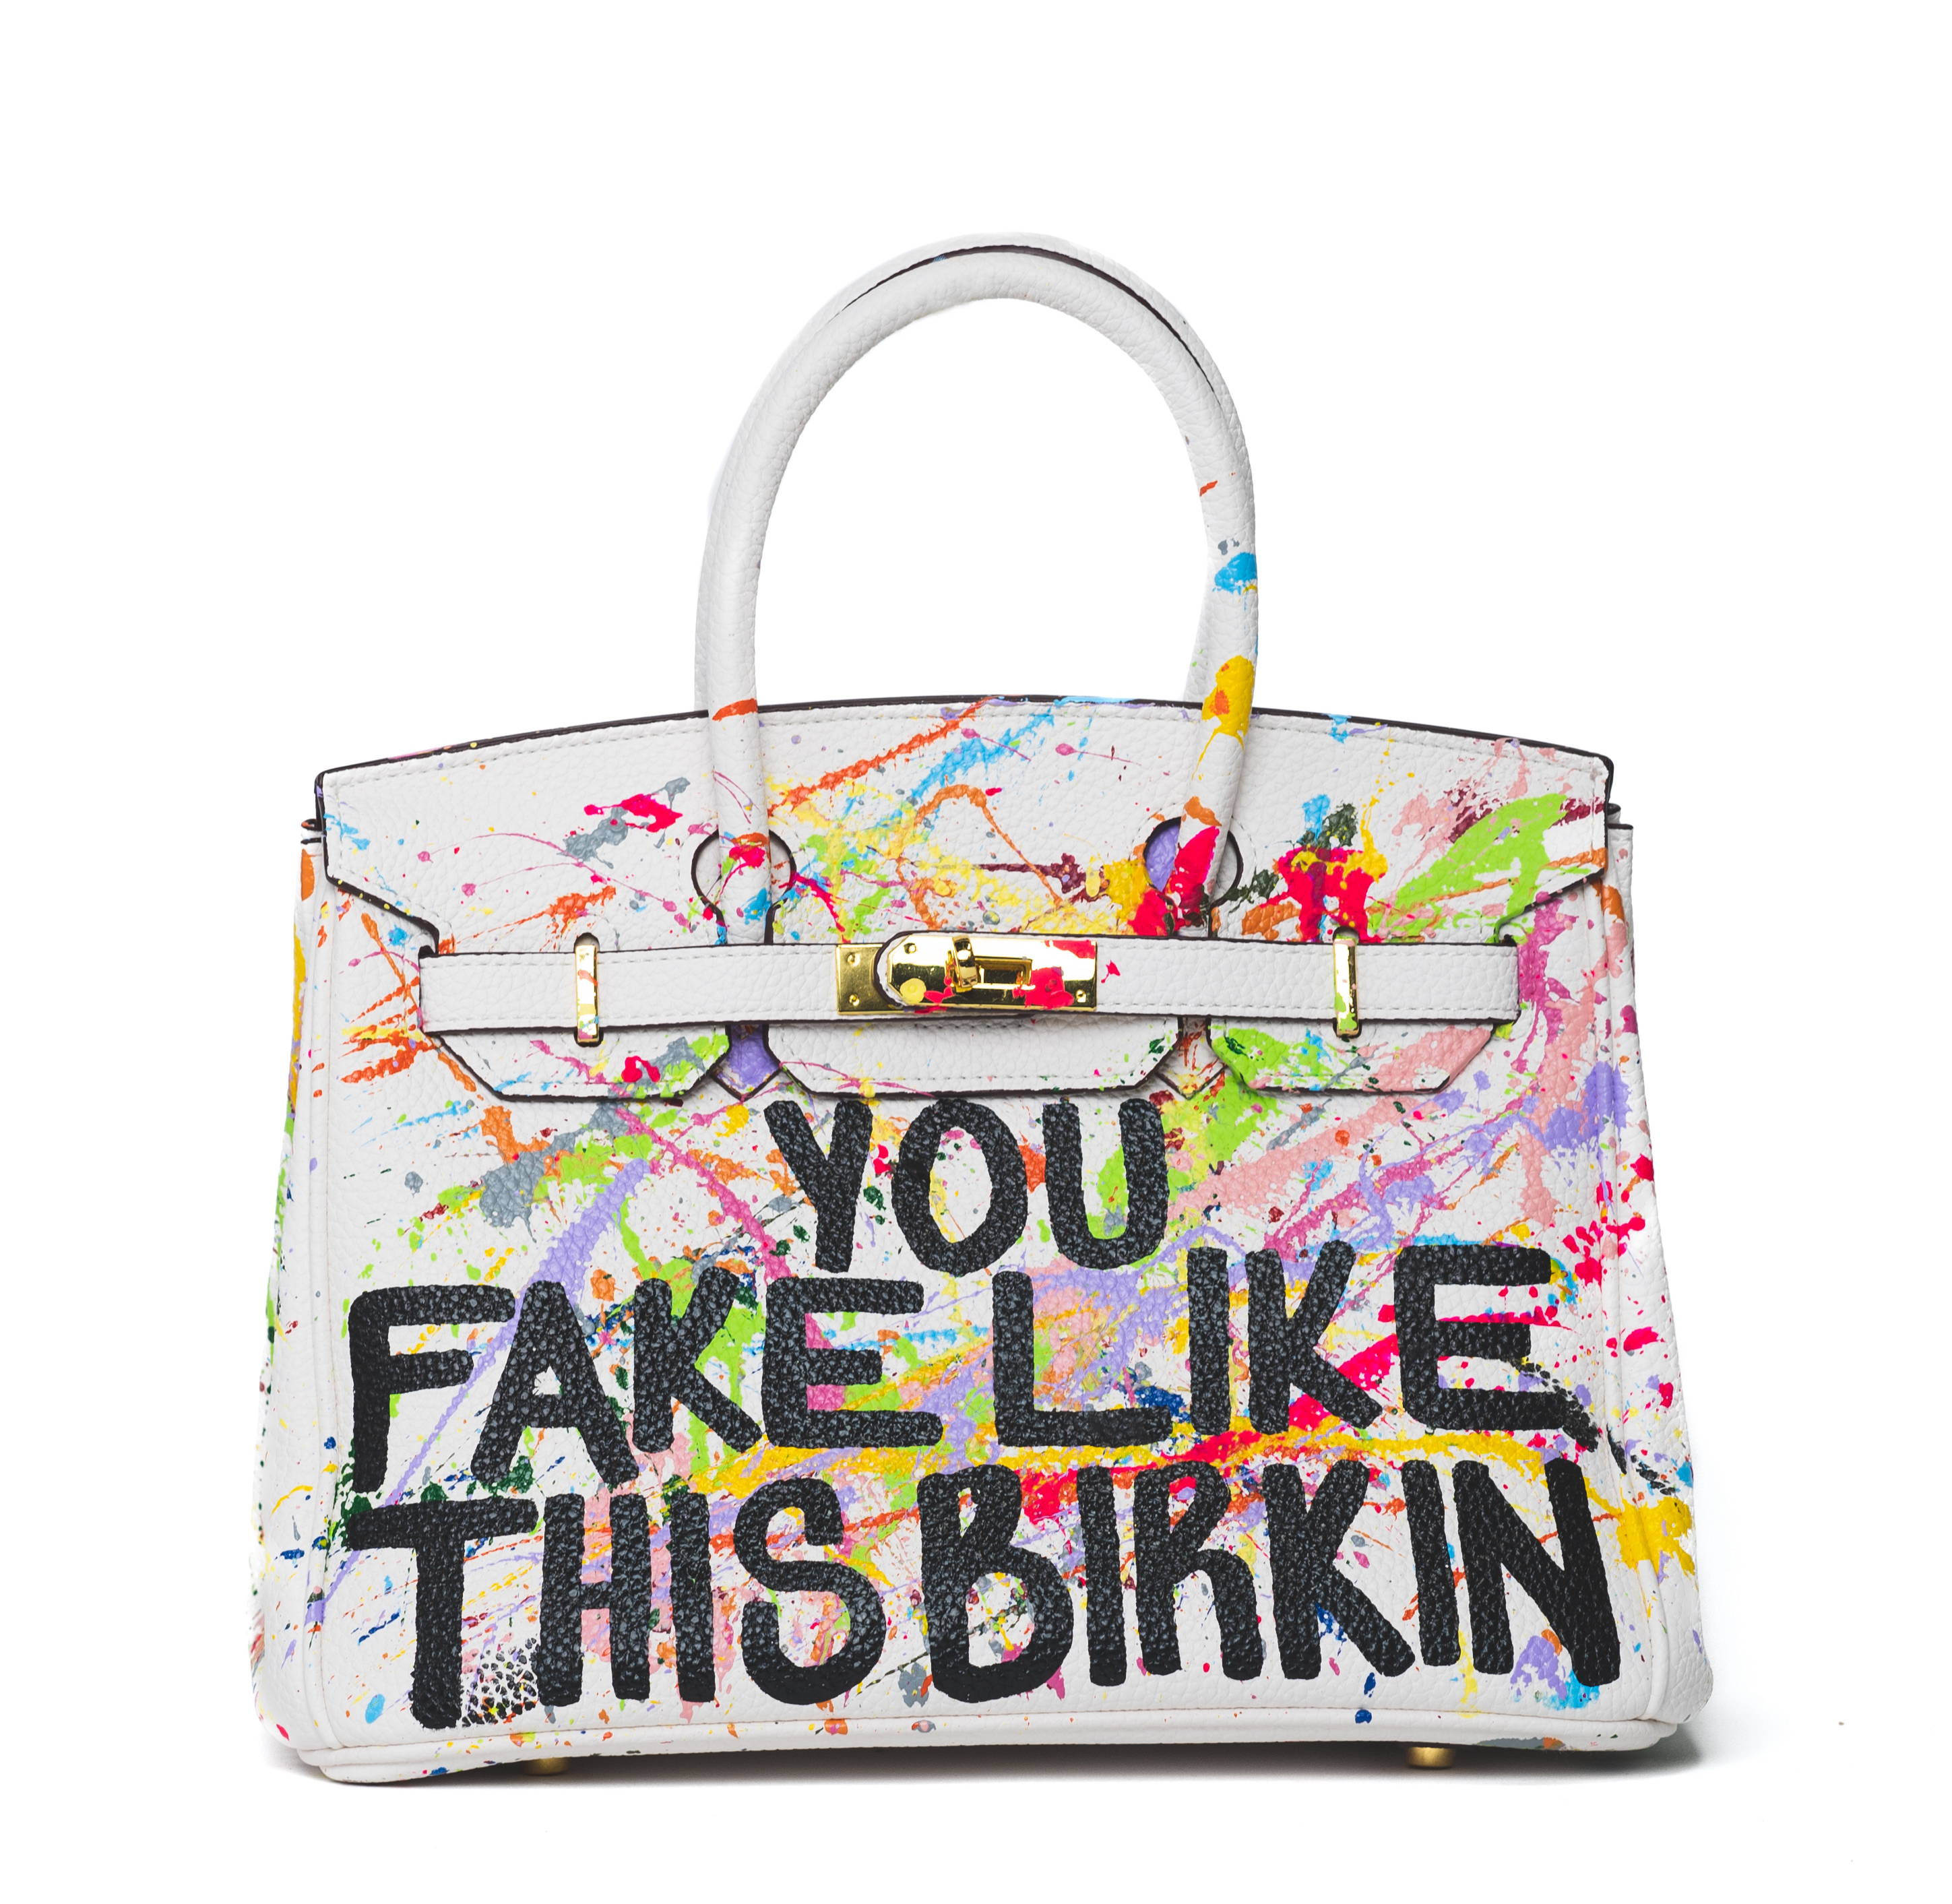 Bags, Sonique Saturday Bag You Fake Like This Birkin Pride Edition